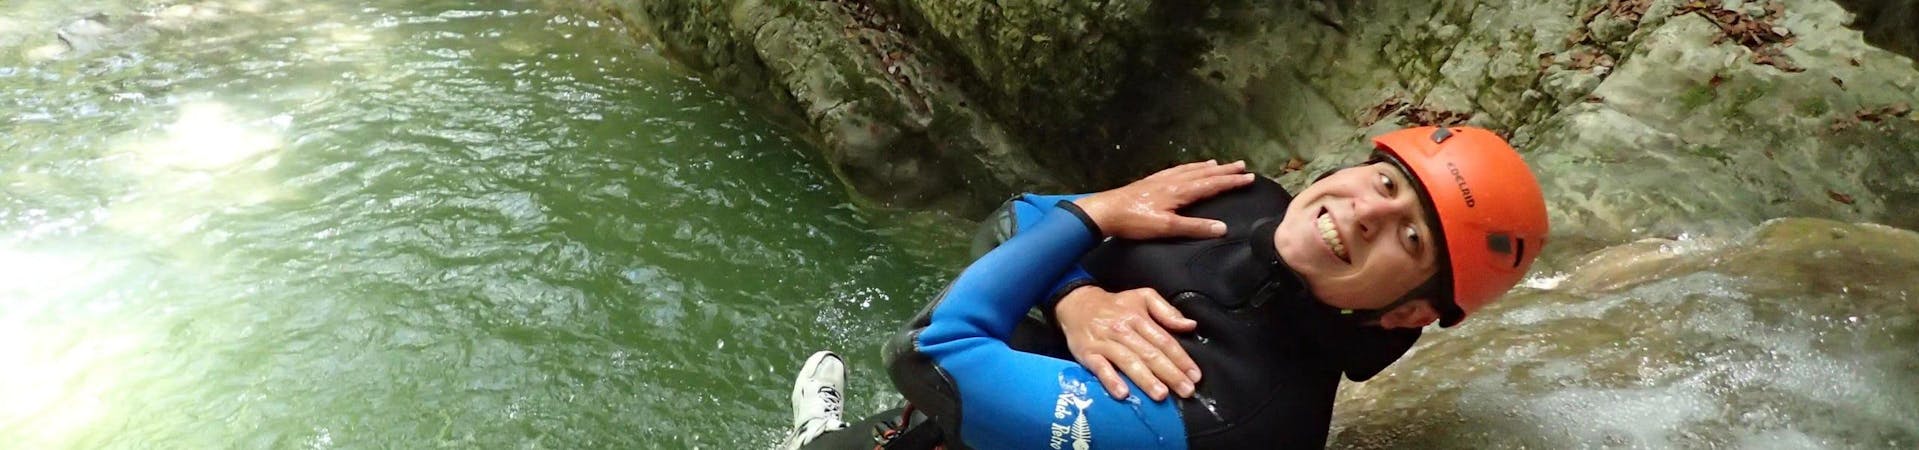 Un participant de Canyoning "Découverte" - Canyon d'Angon avec Terréo Canyoning descend la cascade.